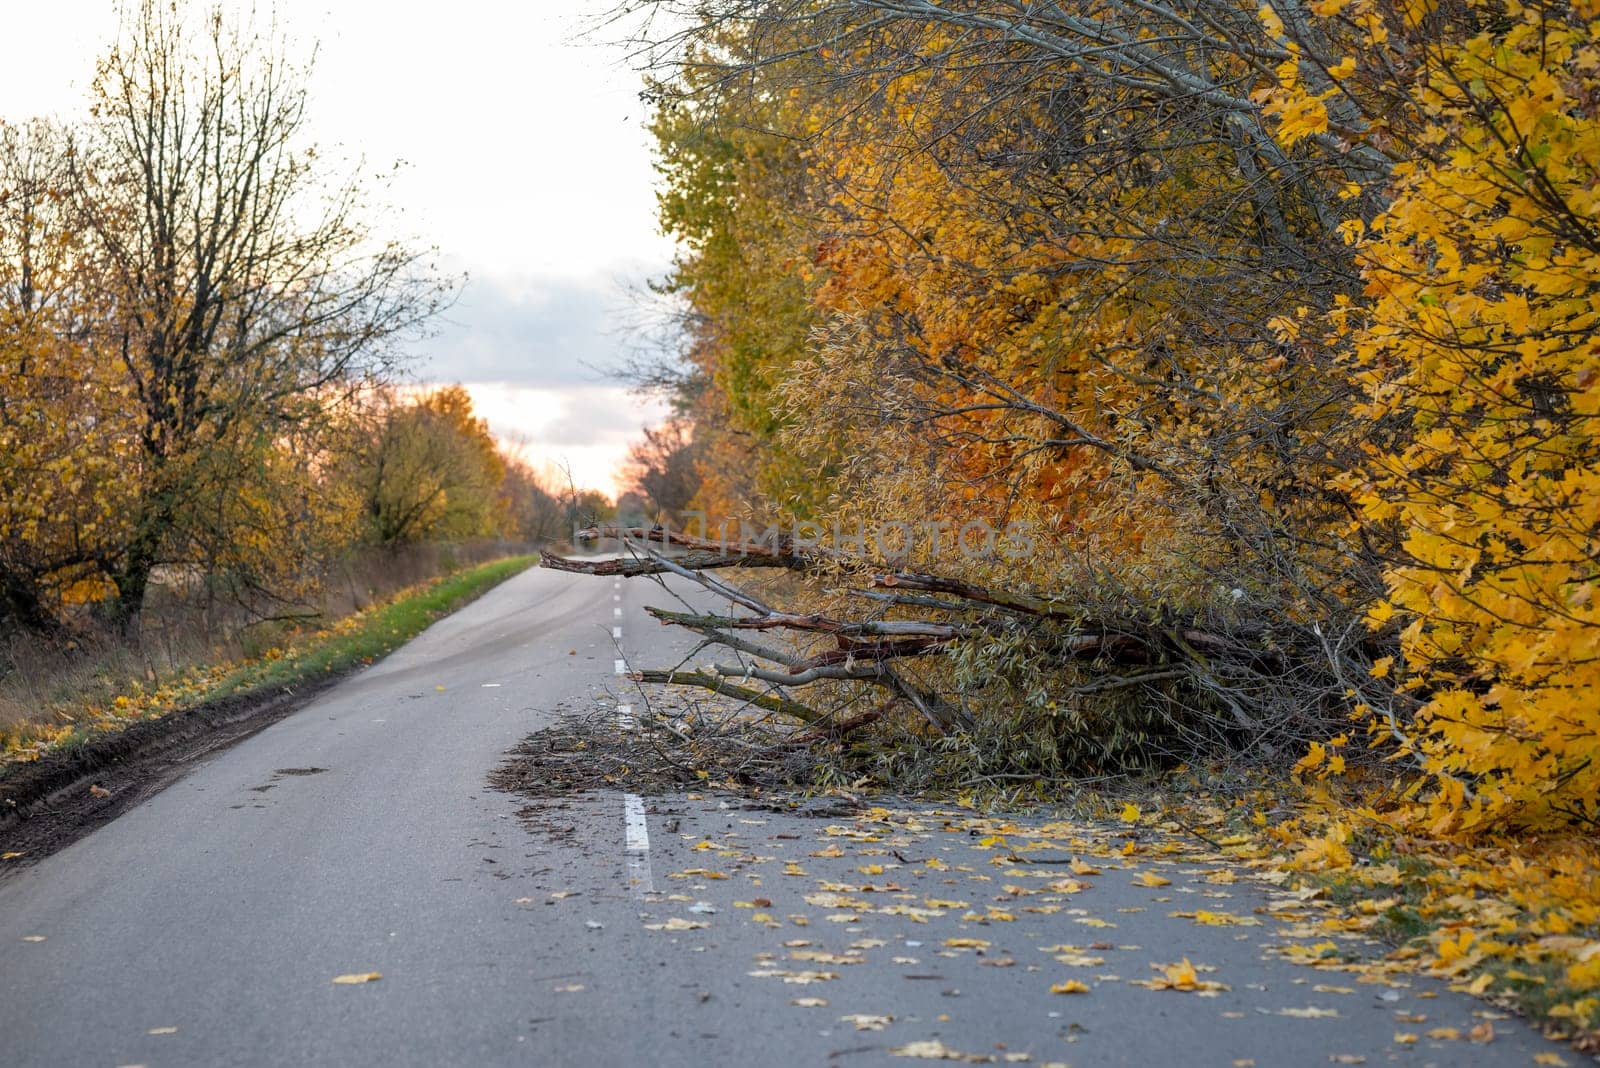 Fallen tree on the asphalt road in countryside by VitaliiPetrushenko